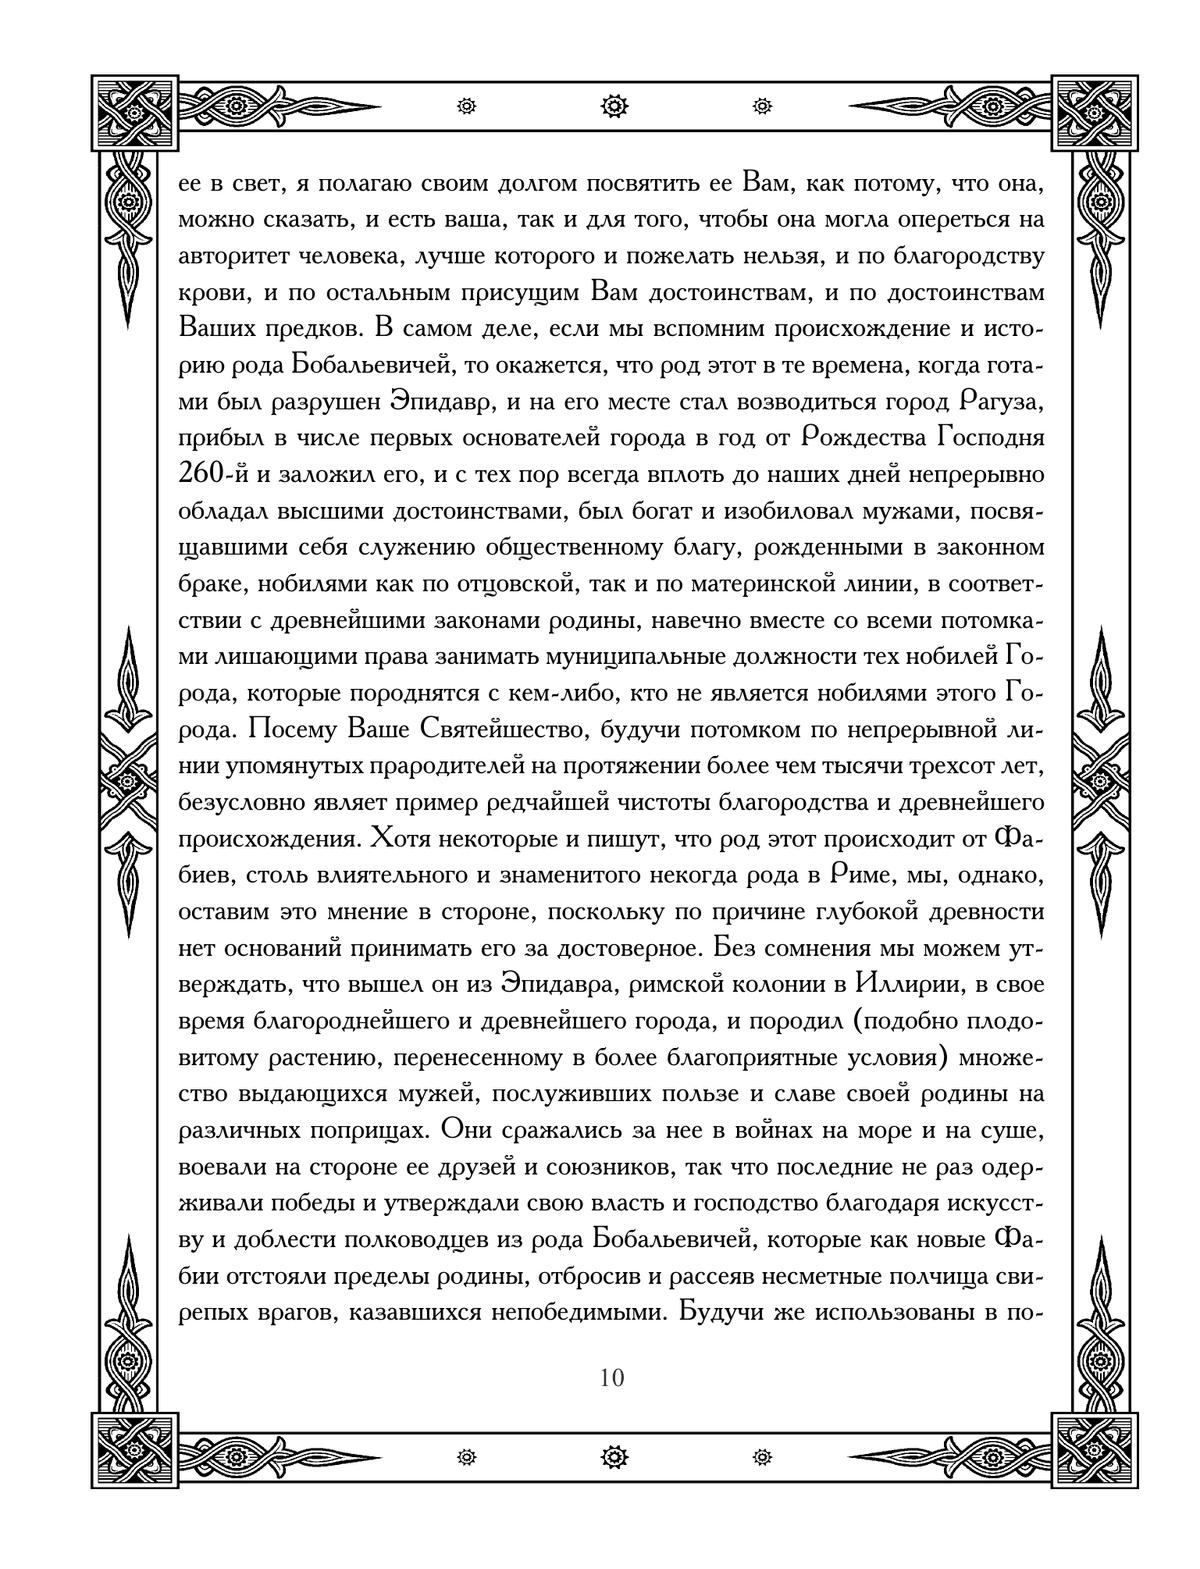 Мавро Орбини Славянское царство. Происхождение славян и распространение их господства 10